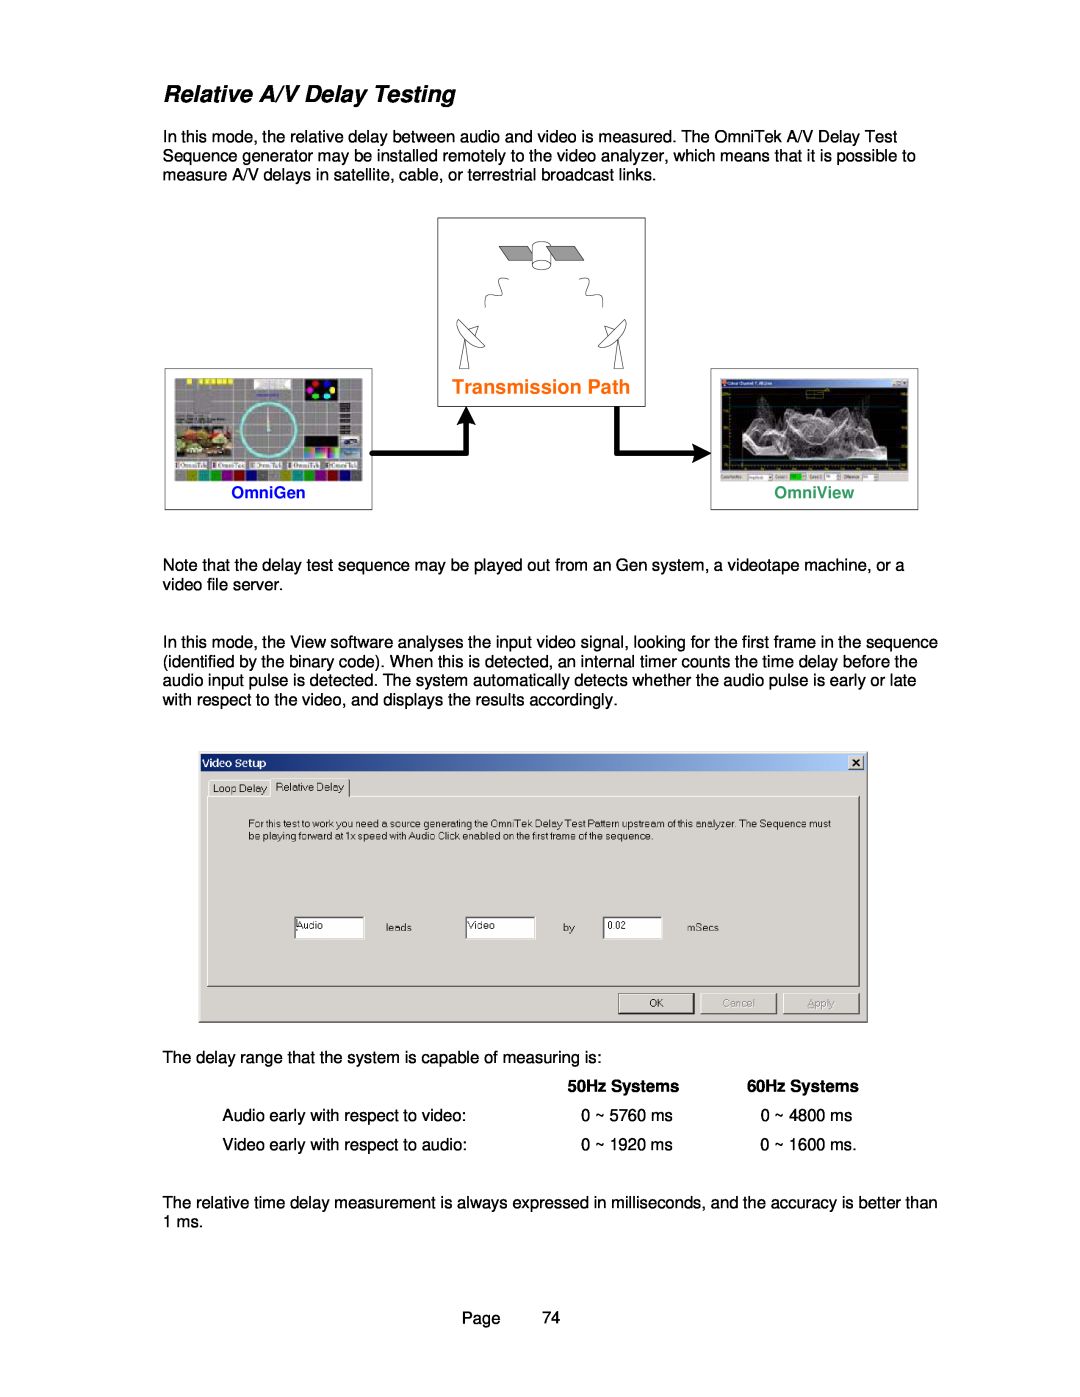 OmniTek OmniTek XR manual Relative A/V Delay Testing, Transmission Path, 50Hz Systems 